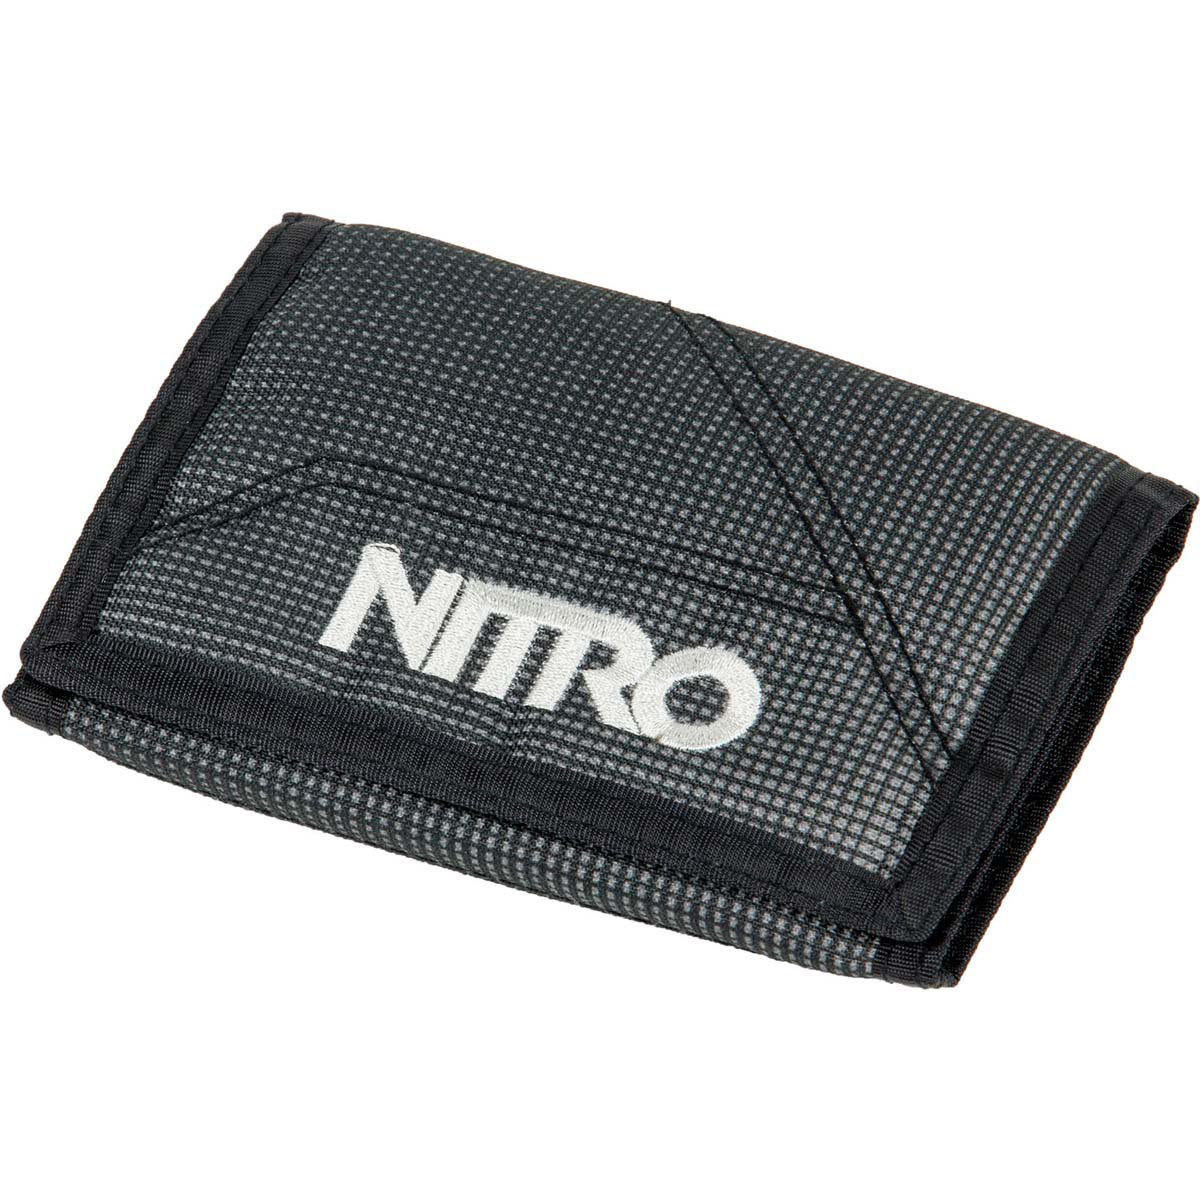 Blur Wallet Nitro Geldbeutel | Shop Nitrobags